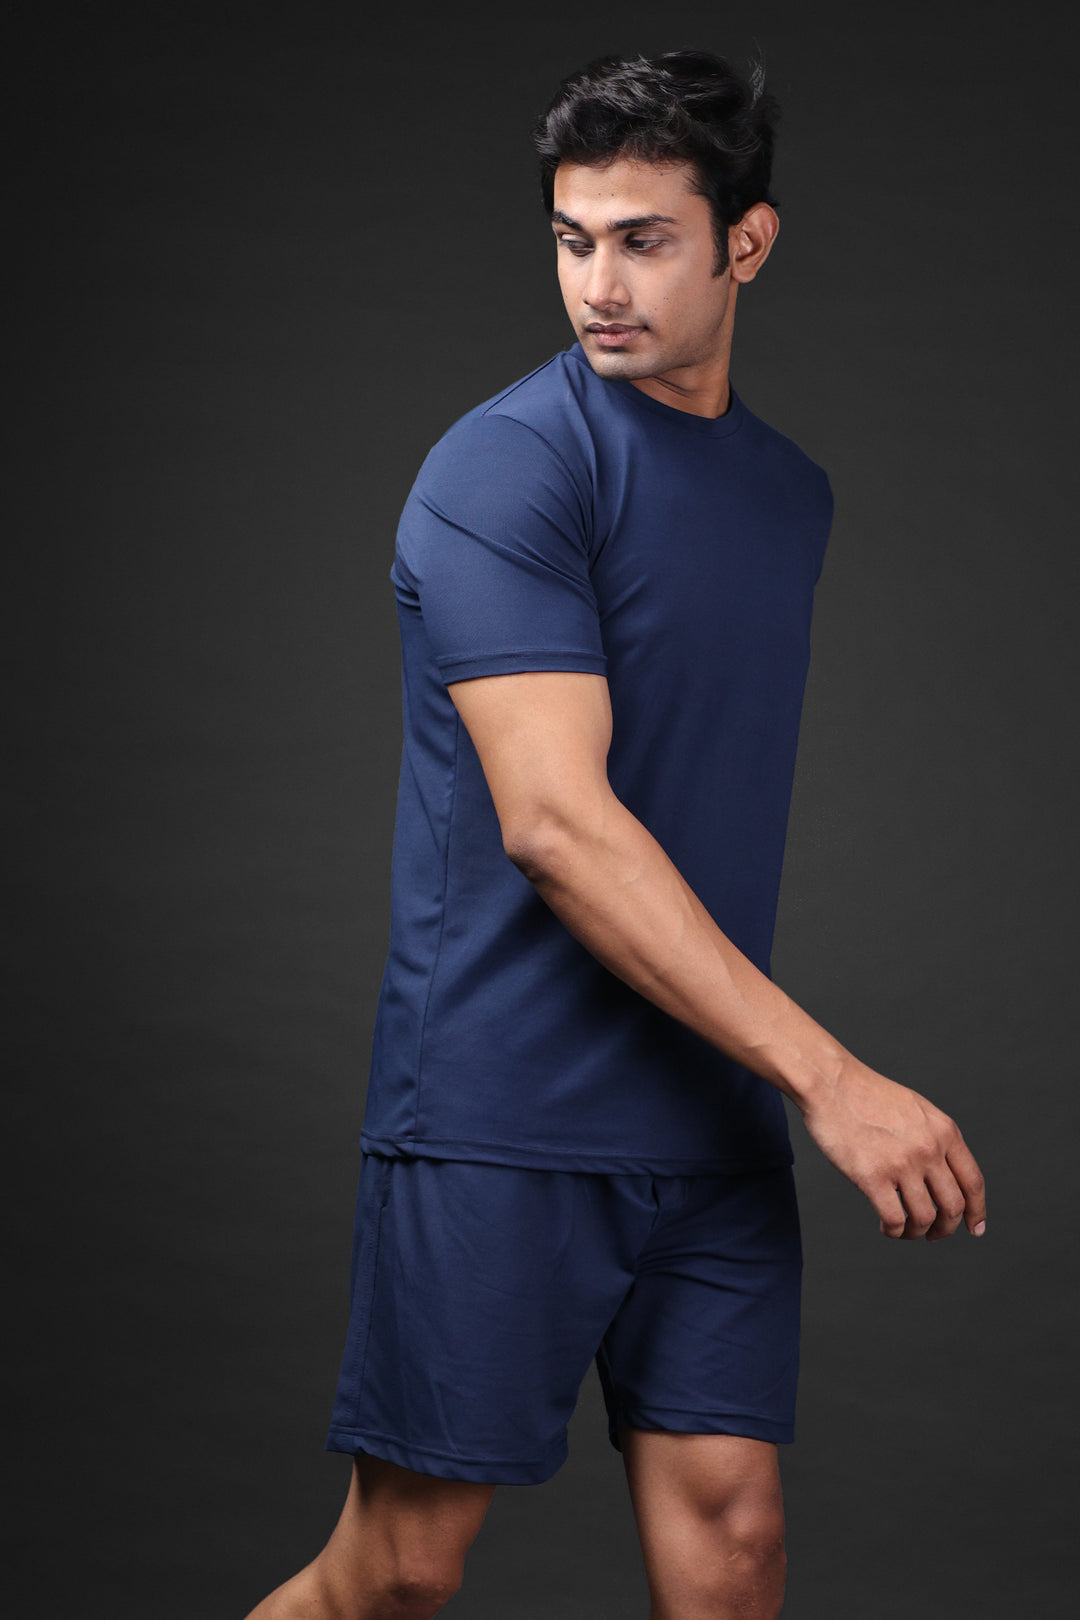 Active-Wear Co-Ord Set - Denim Blue Tee & Shorts Basic Co-ord Set#2